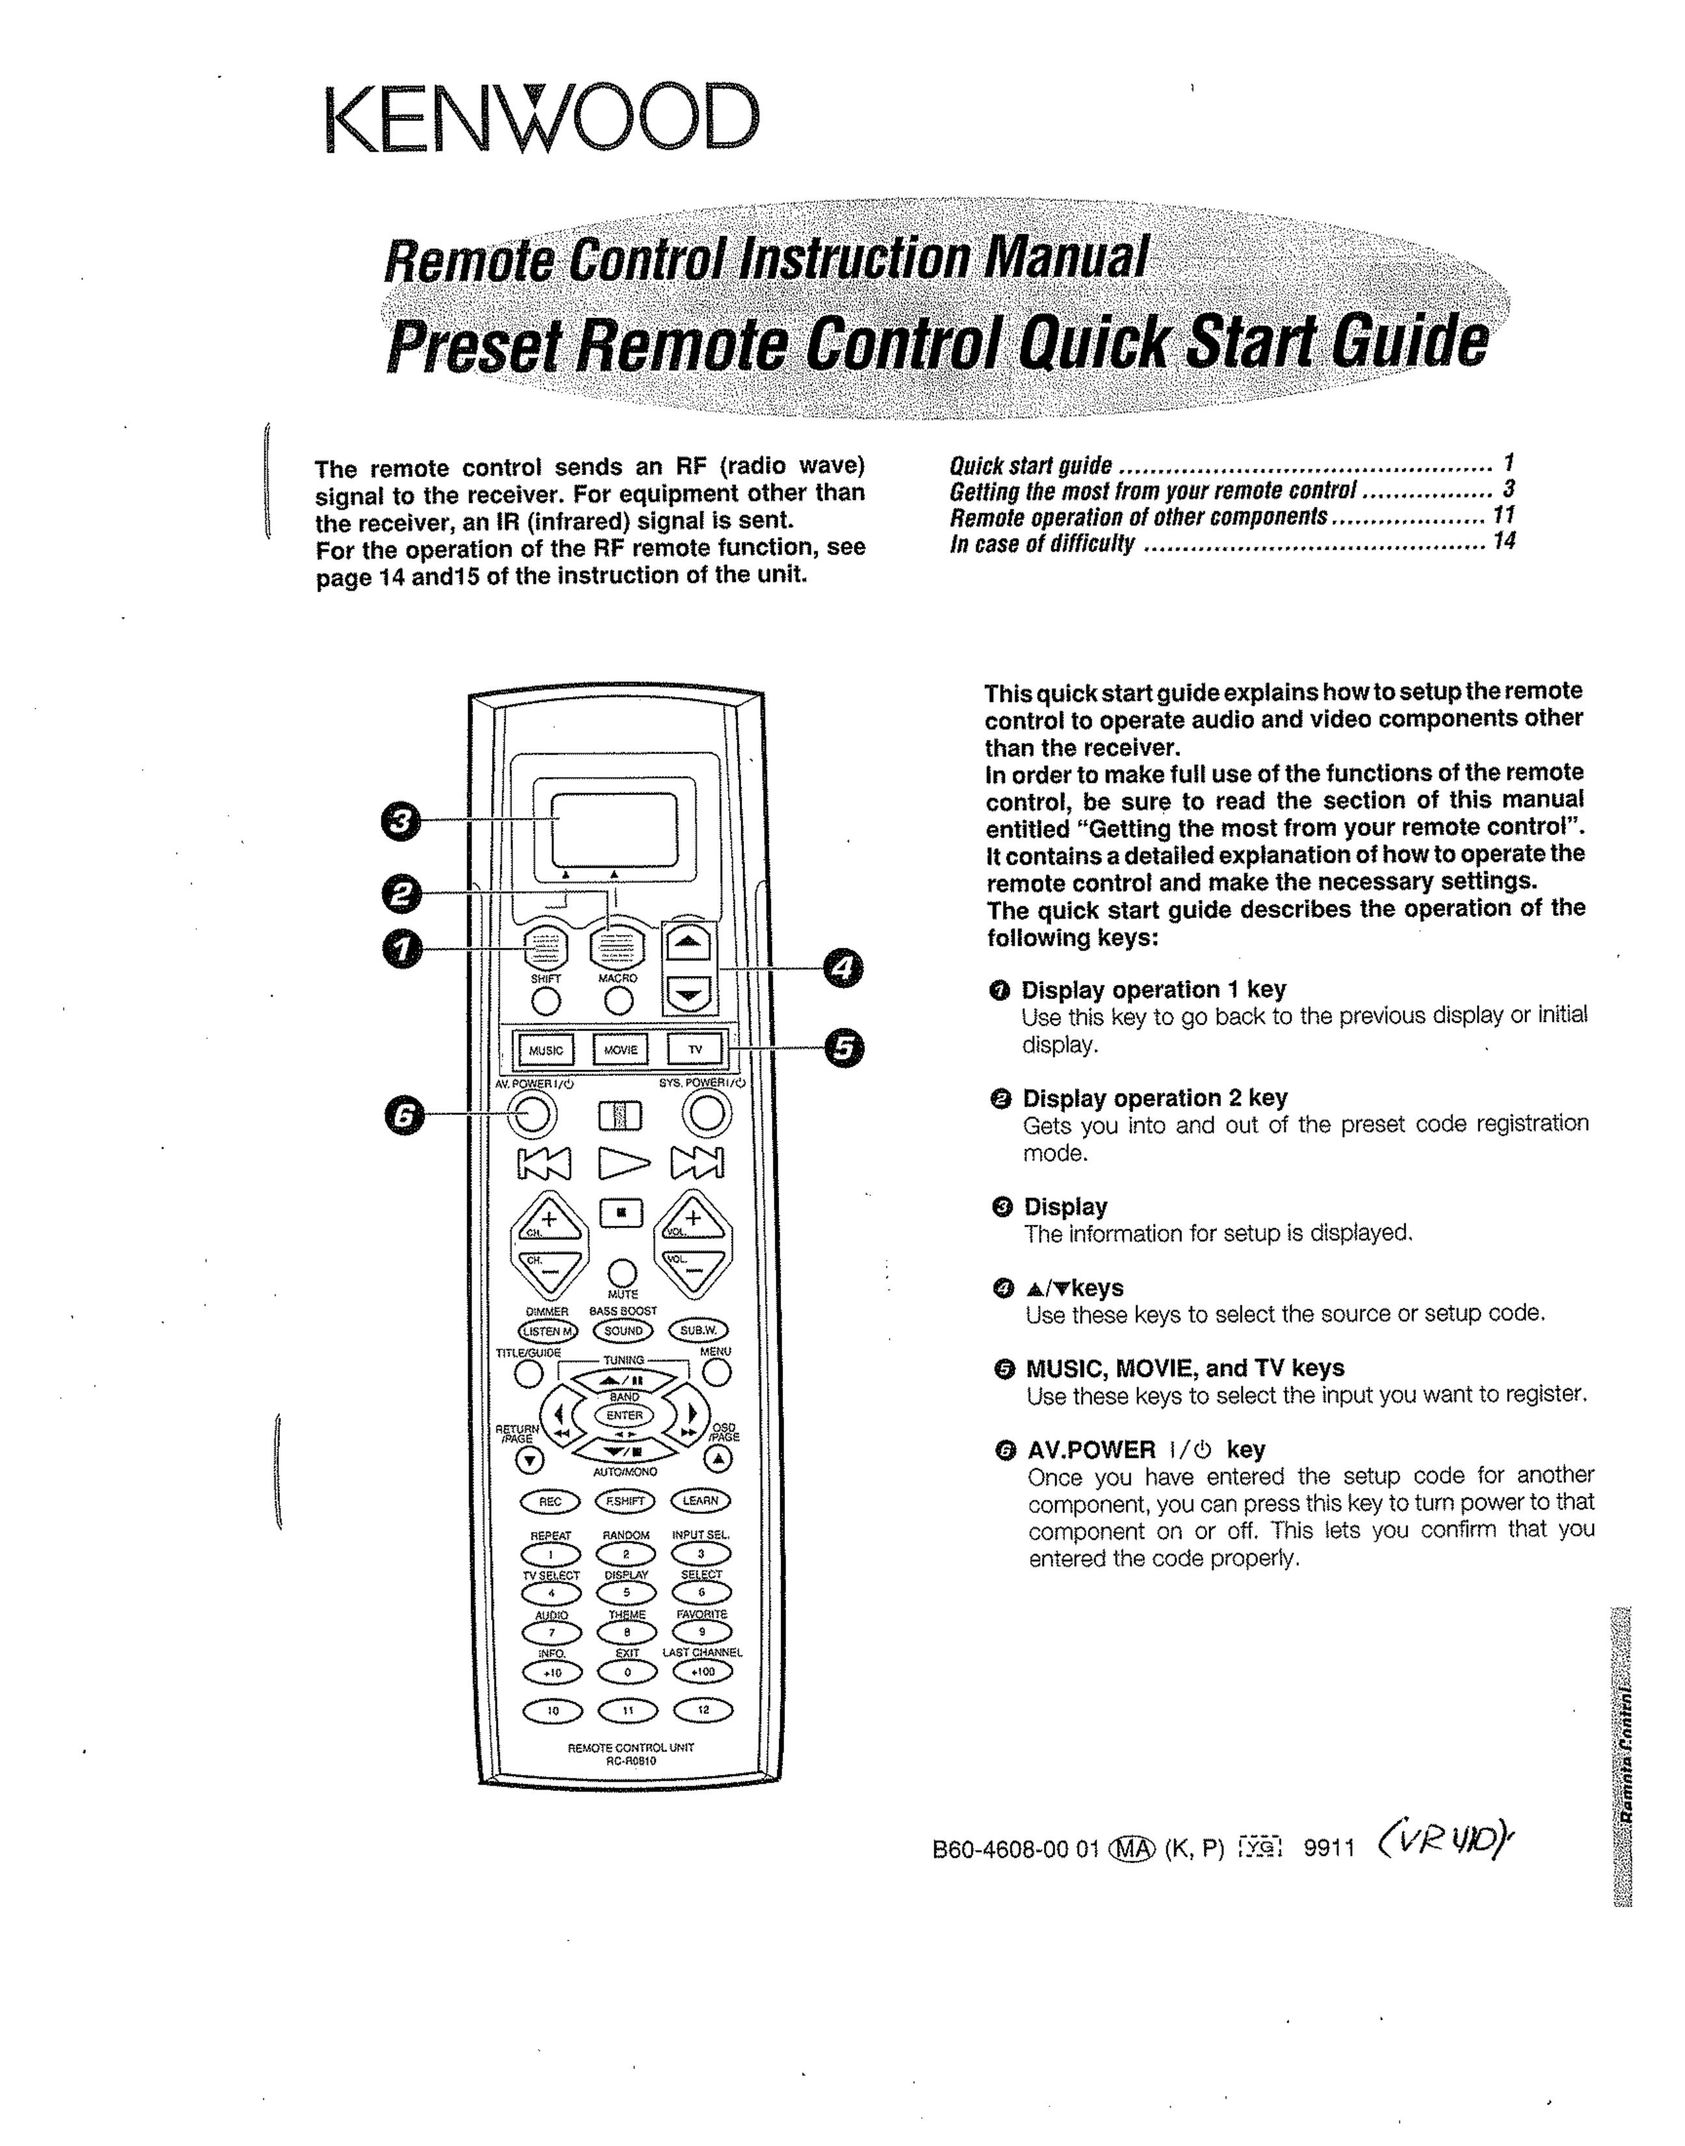 Kenwood Preset Remote Control Universal Remote User Manual